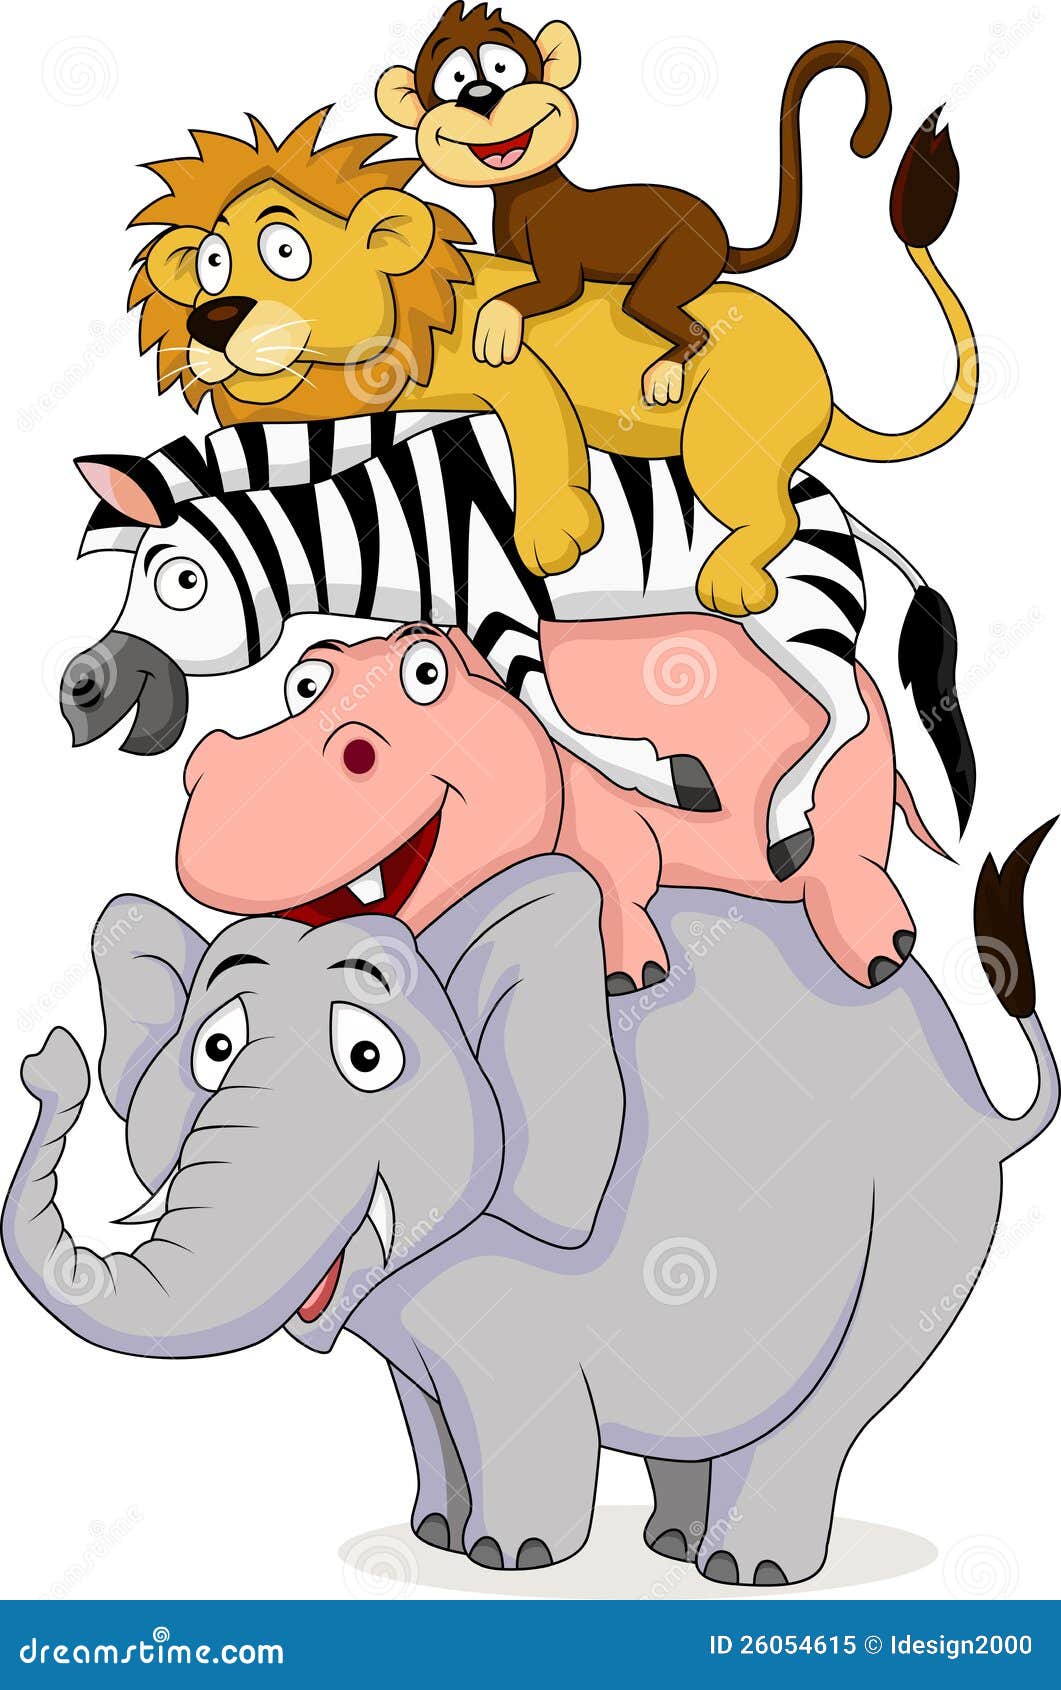 Funny animal cartoon stock illustration. Illustration of jungle - 26054615